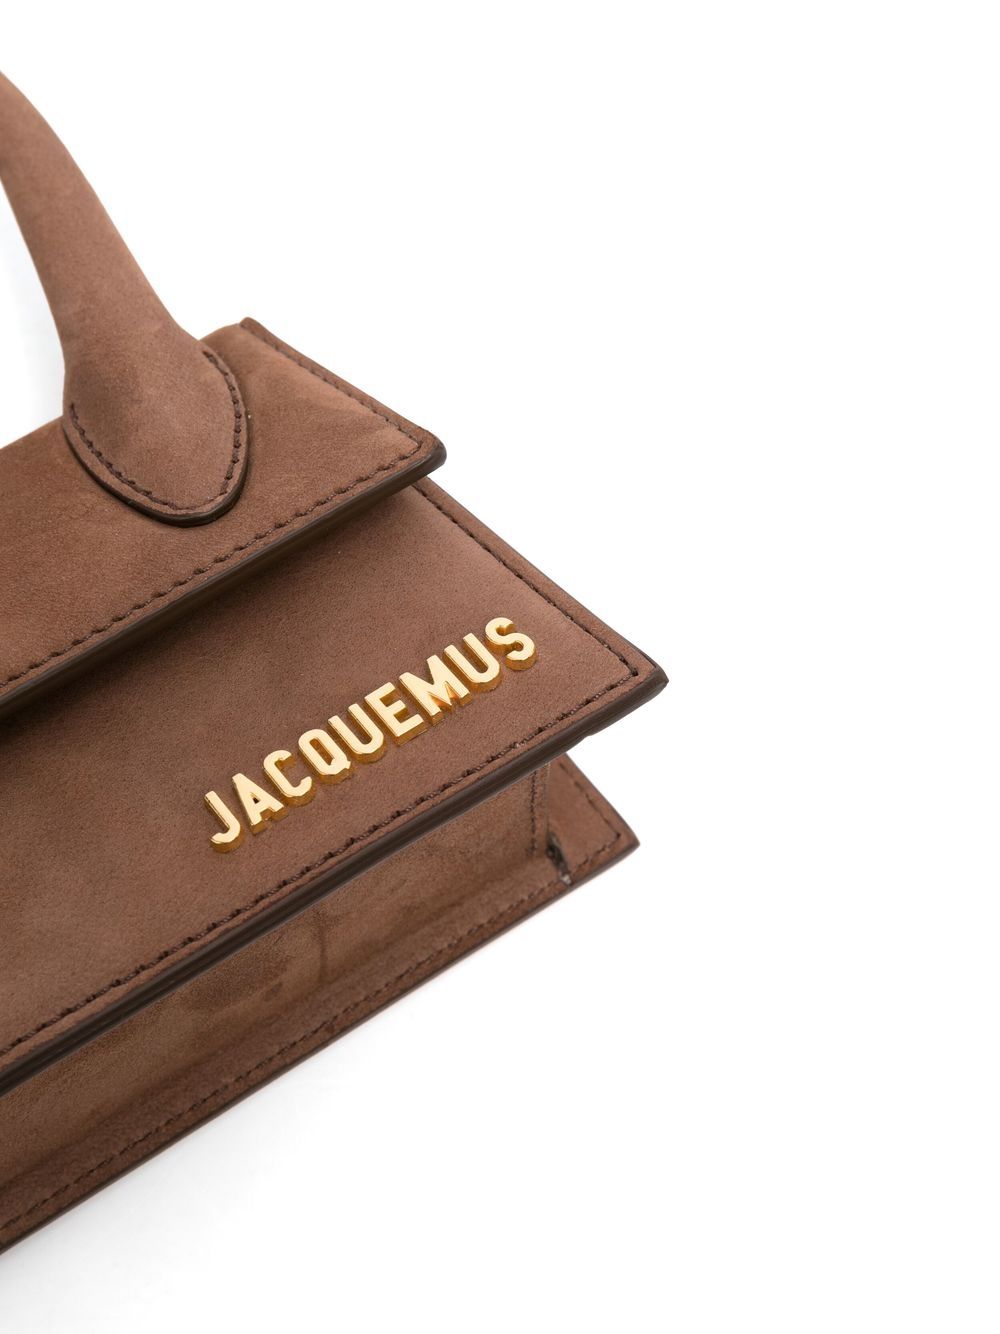 Shop Jacquemus Le Chiquito Mini Tote Bag In Brown